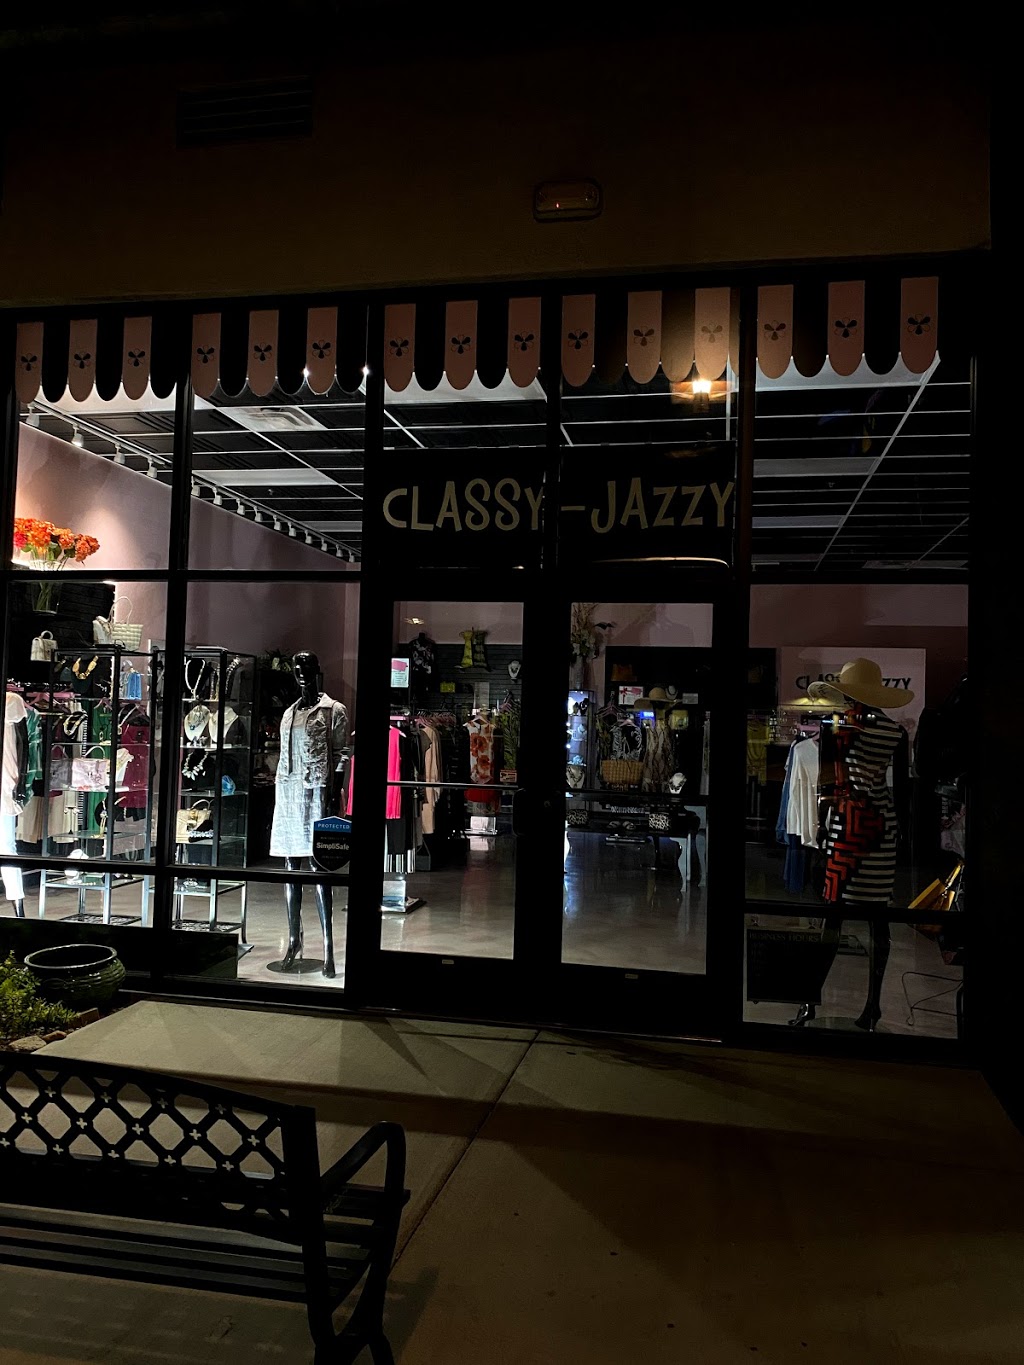 Classy-Jazzy Cutique | 16725 E Ave of the Fountains #106, Fountain Hills, AZ 85268, USA | Phone: (602) 697-0600